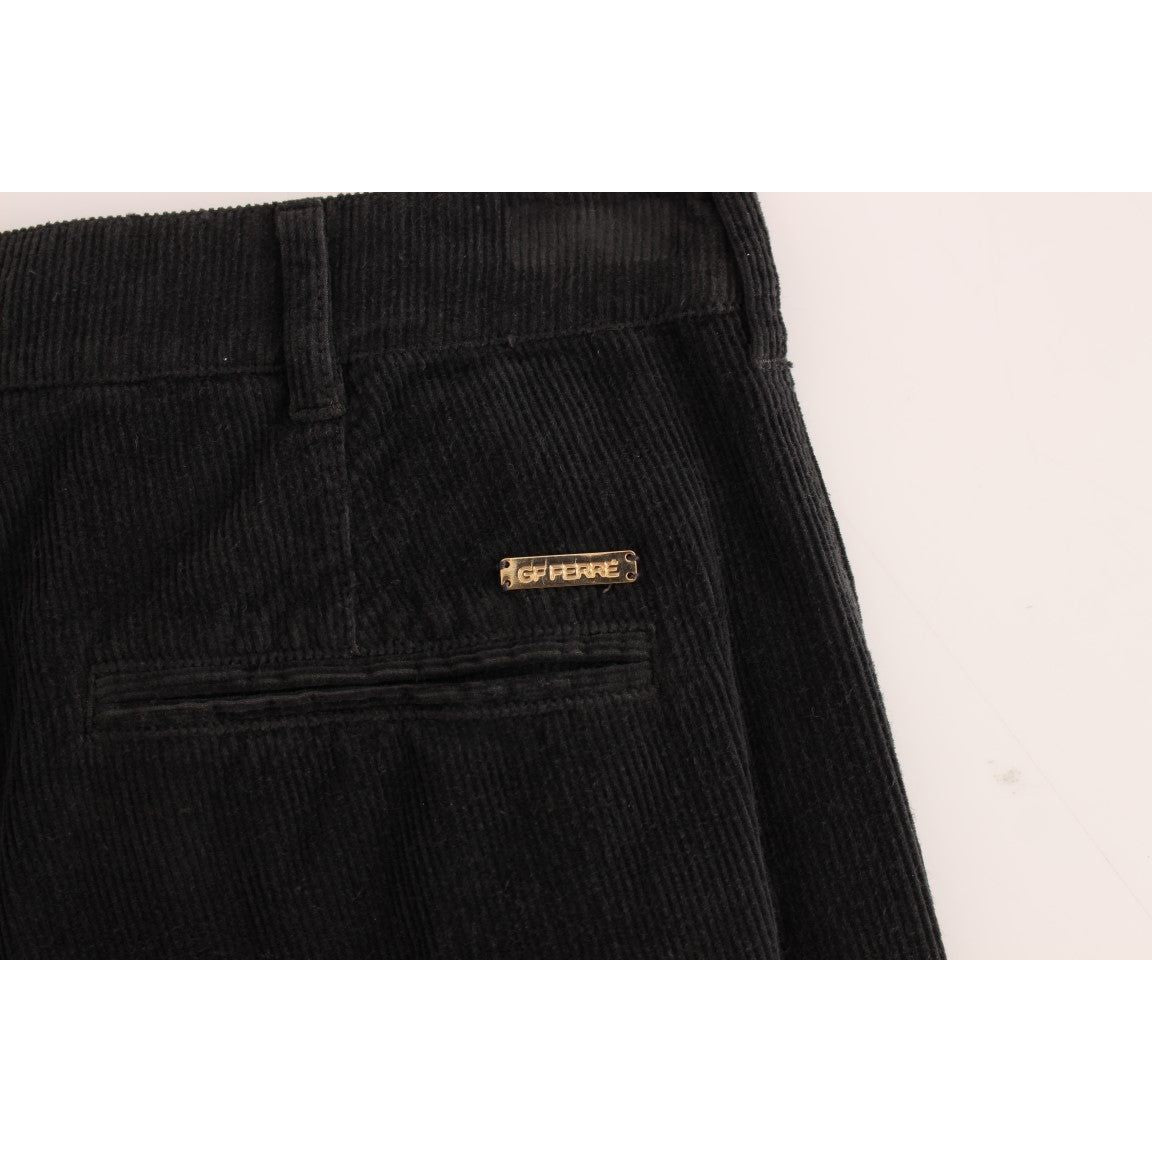 GF Ferre Elegant Black Cotton Corduroy Pants Jeans & Pants black-corduroy-cotton-straight-fit-pants 53278-black-corduroy-cotton-straight-fit-pants-5.jpg